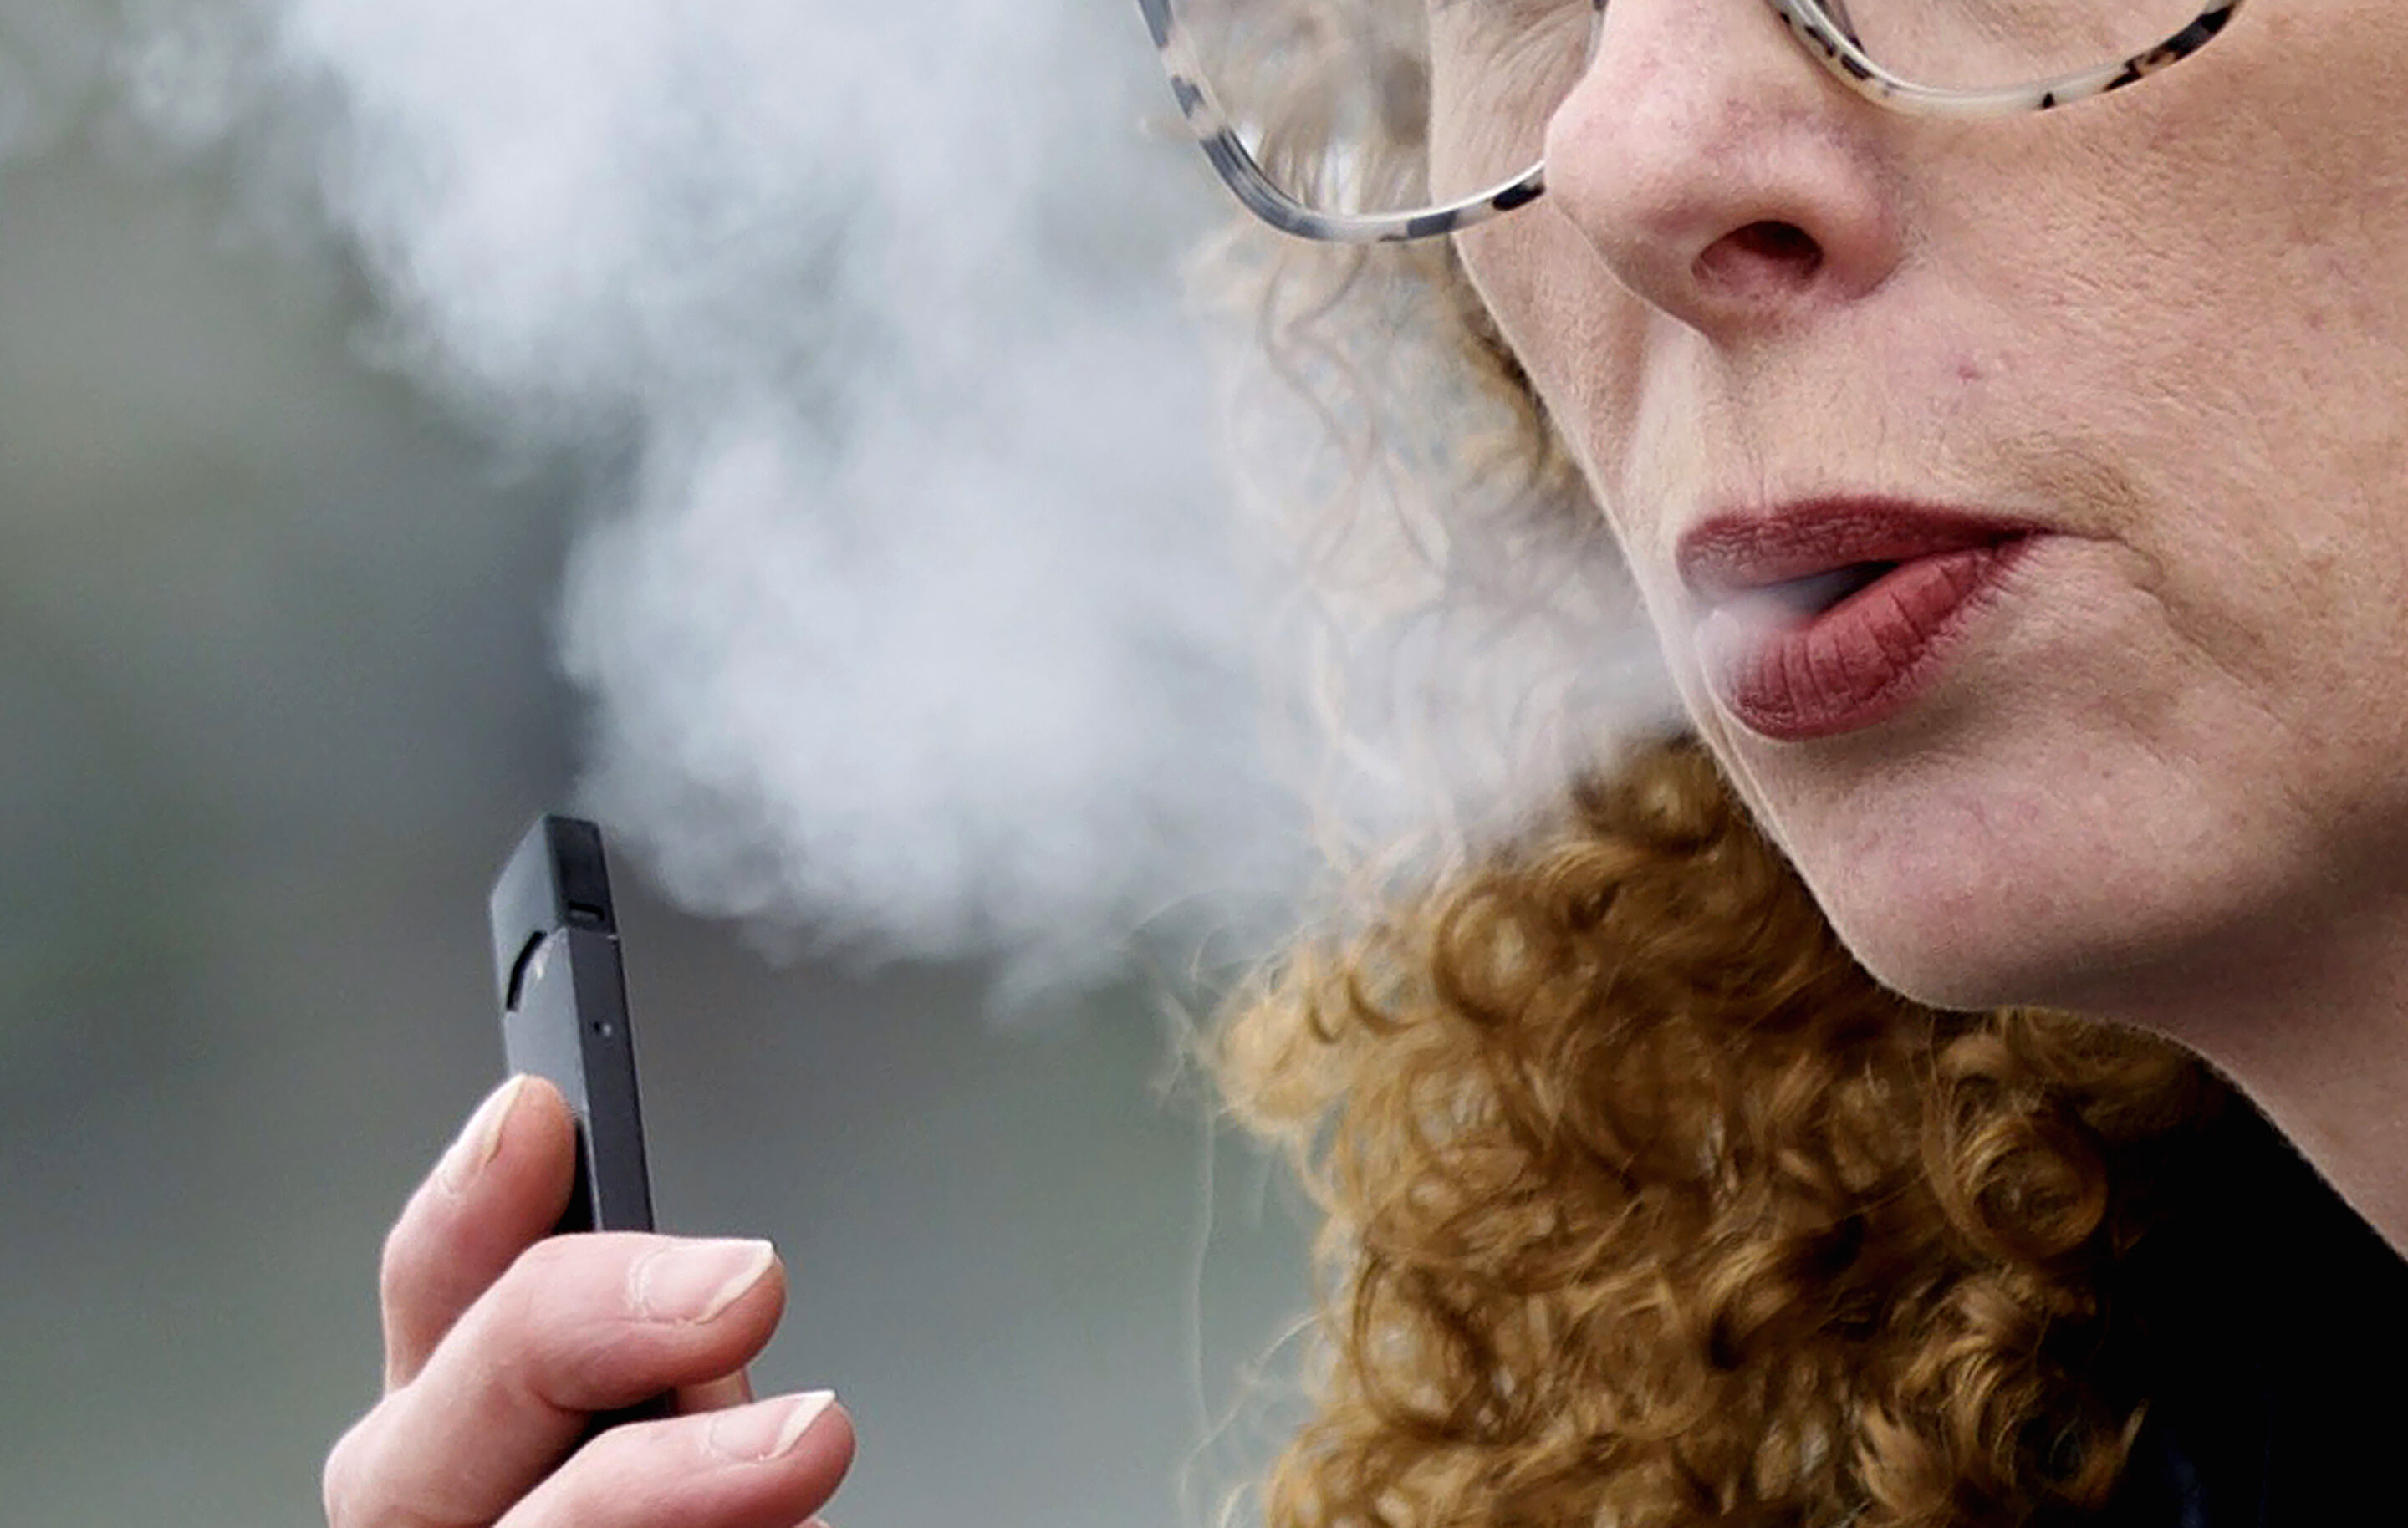 #Juul can keep selling e-cigarettes as court blocks FDA ban